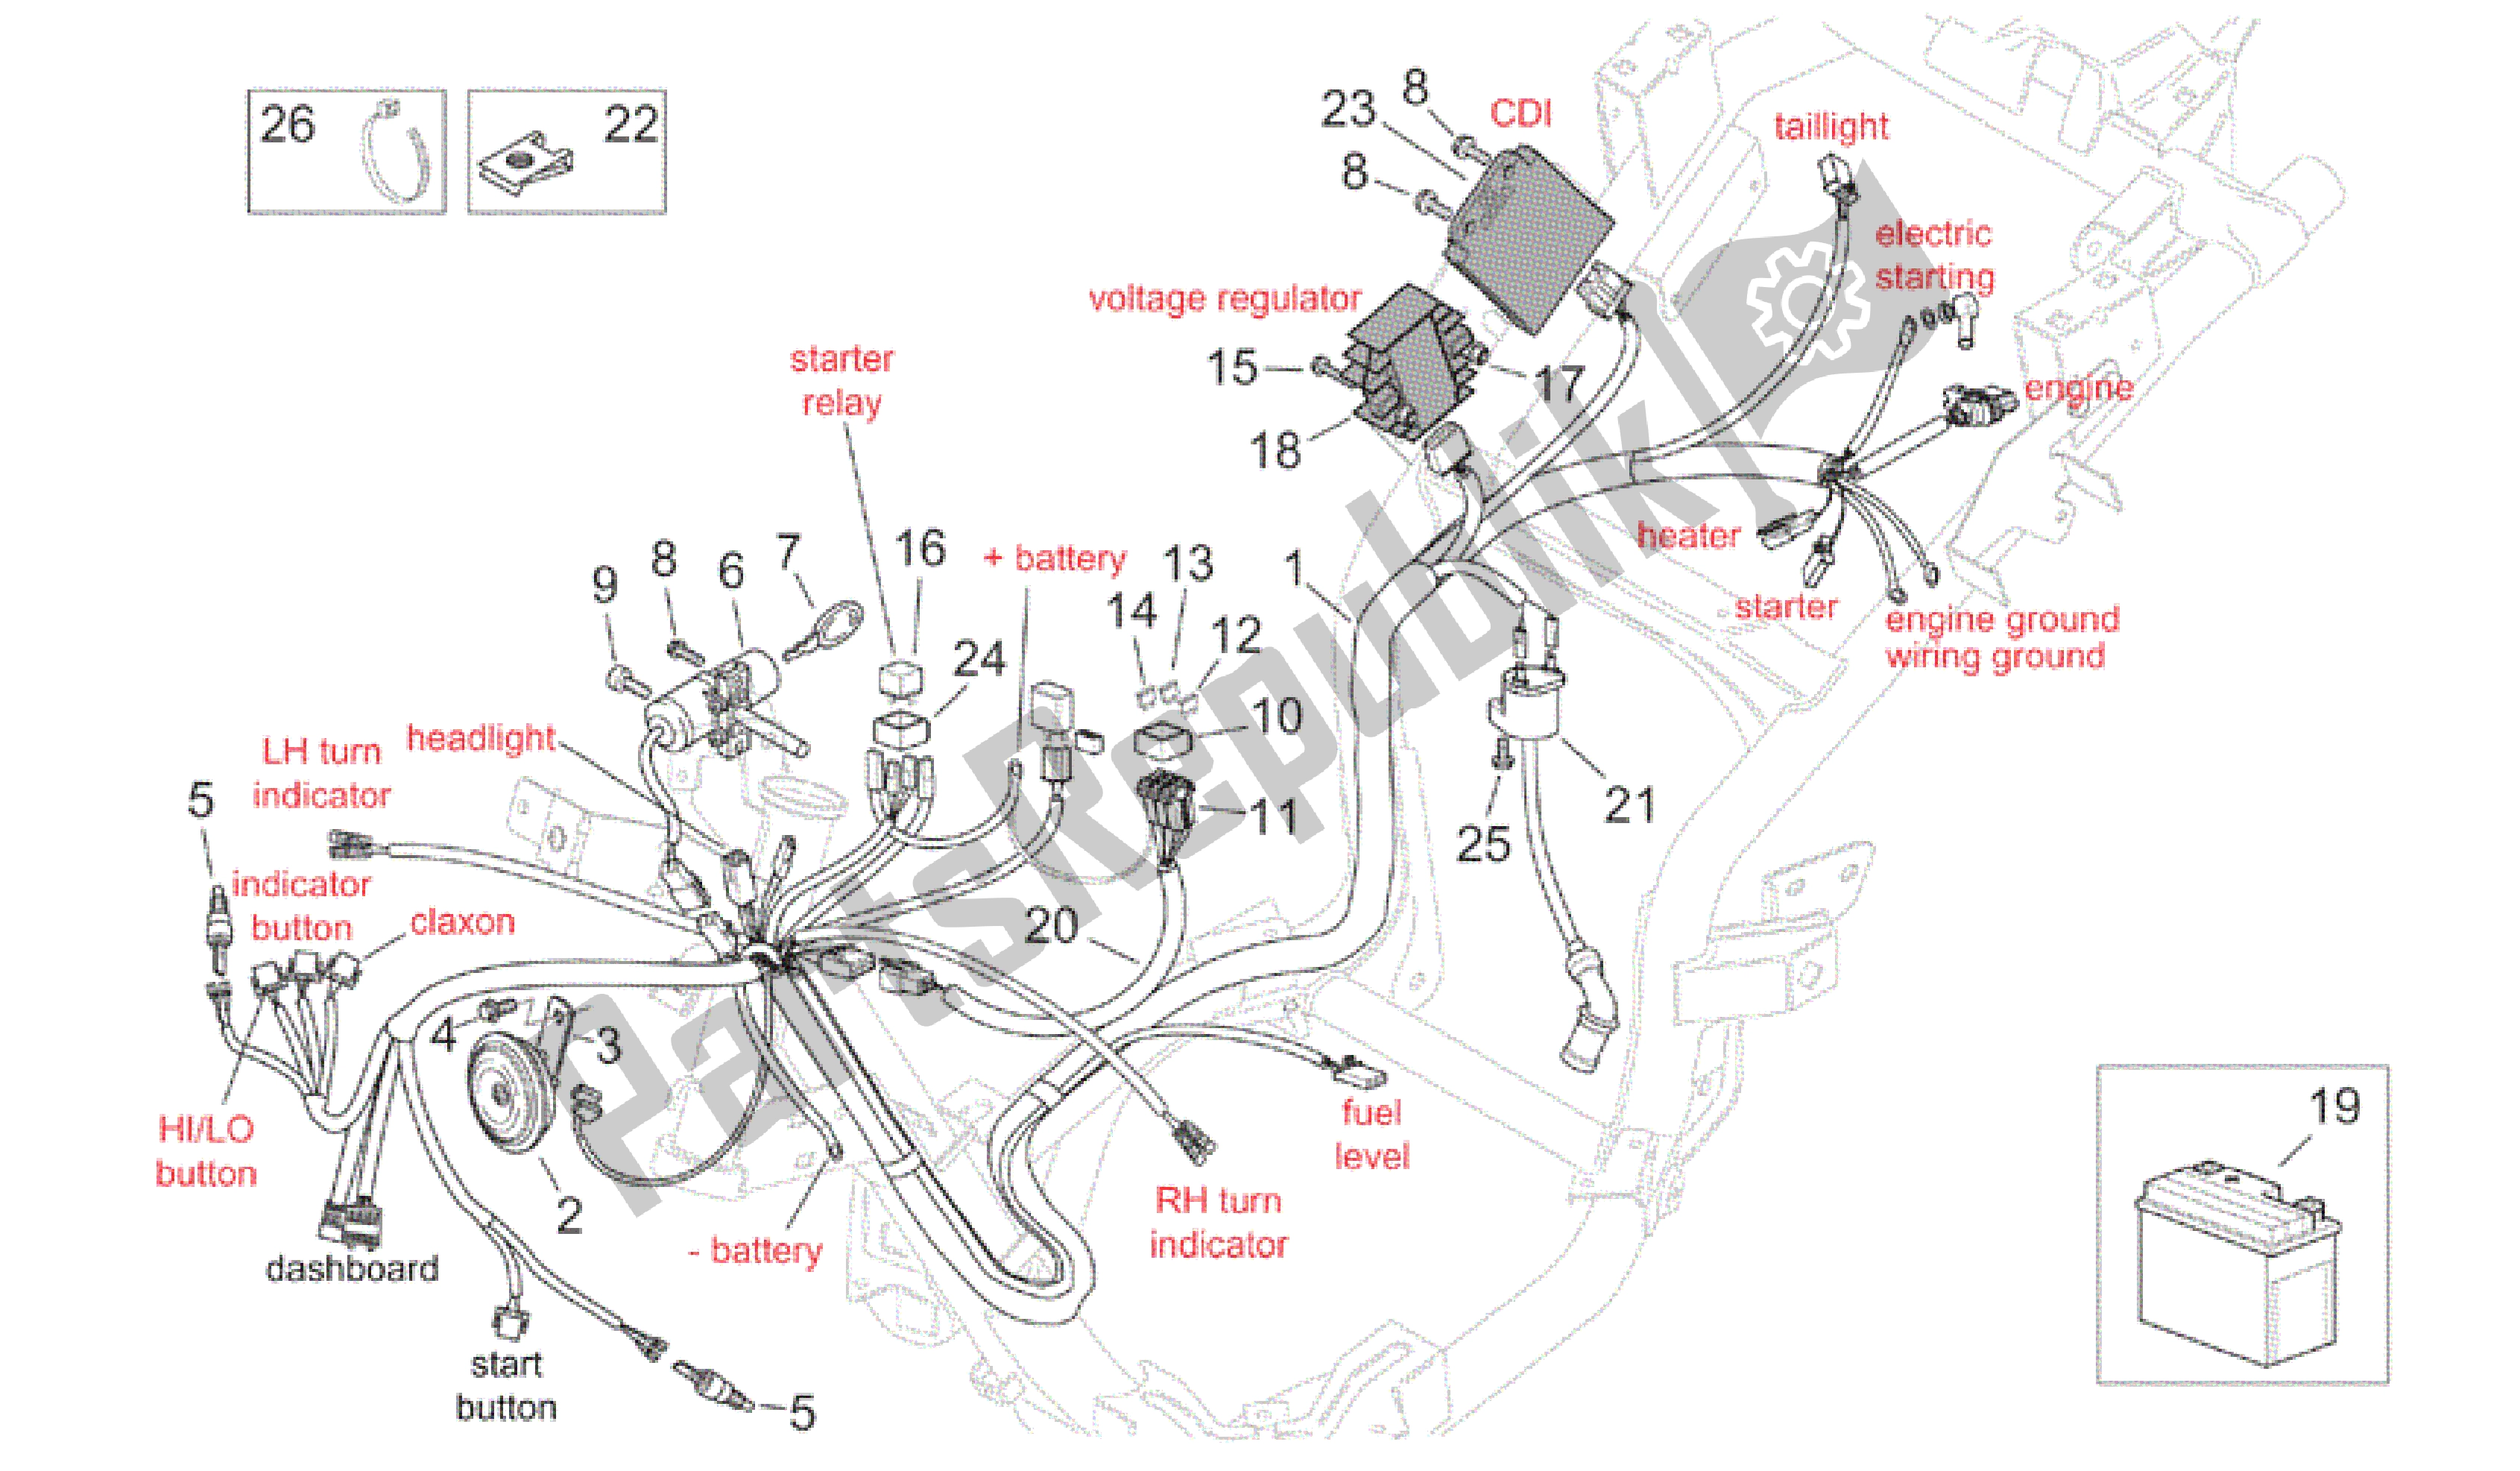 All parts for the Electrical System - Retro' of the Aprilia Mojito 150 2003 - 2007